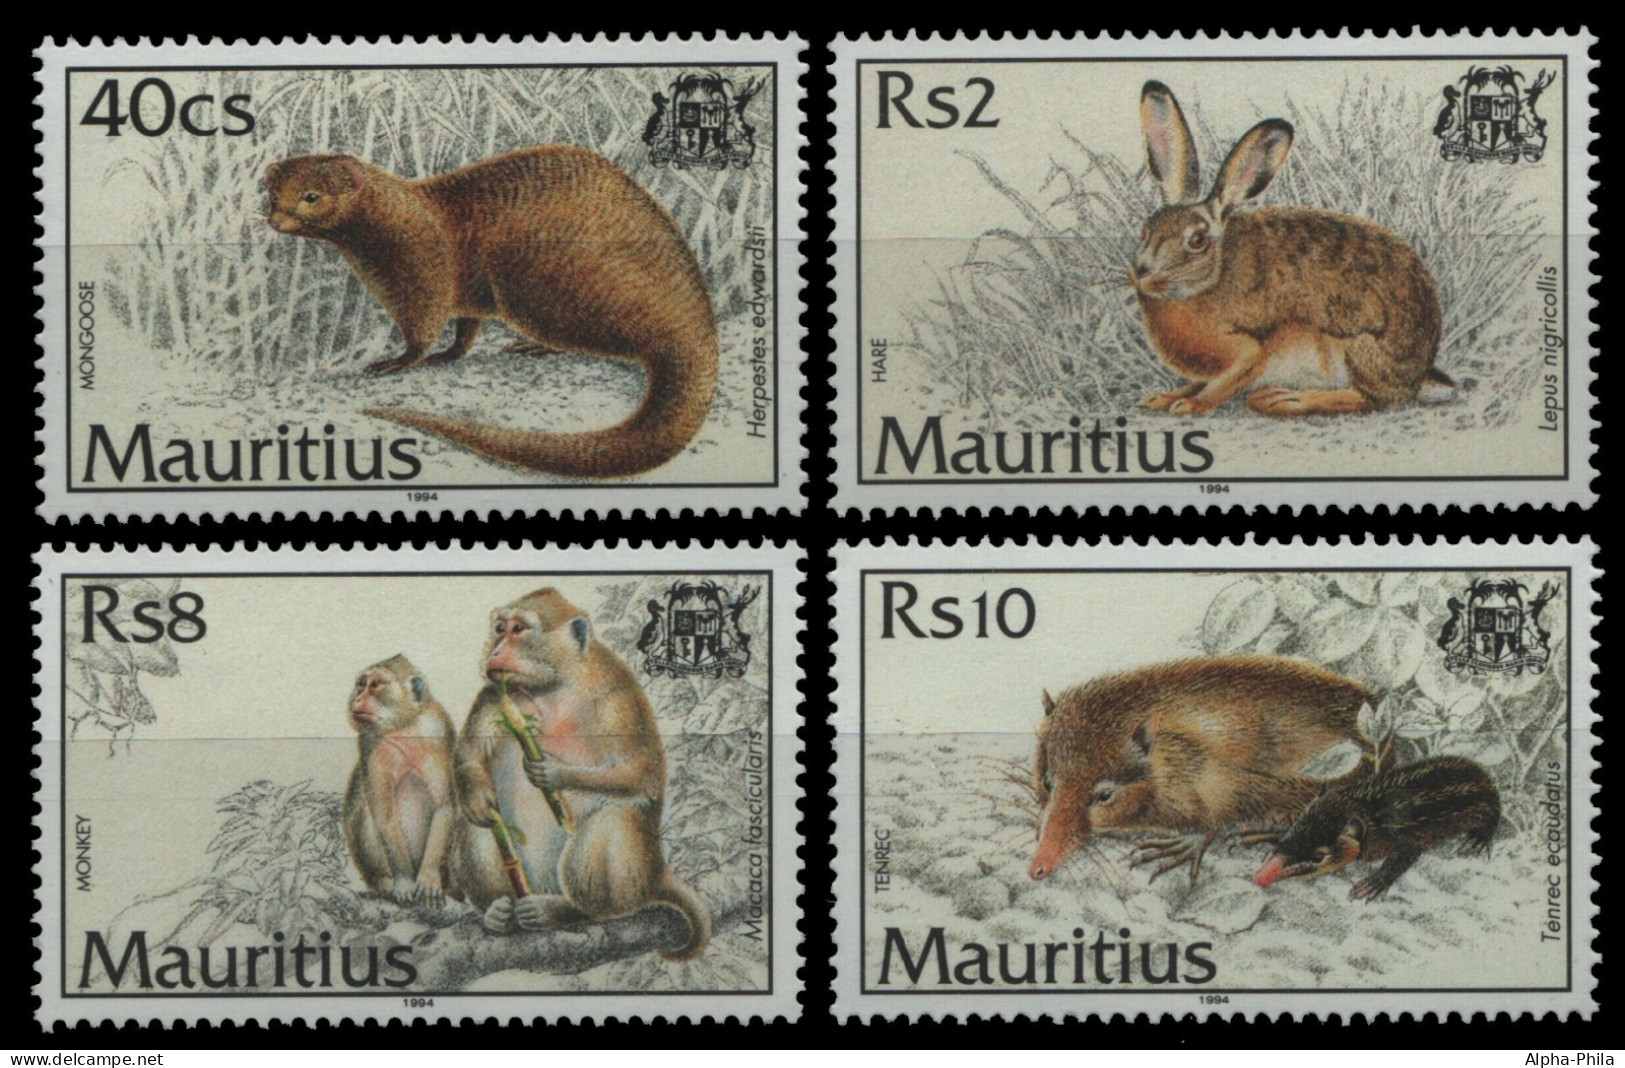 Mauritius 1994 - Mi-Nr. 773-776 ** - MNH - Wildtiere / Wild Animals - Mauritius (1968-...)